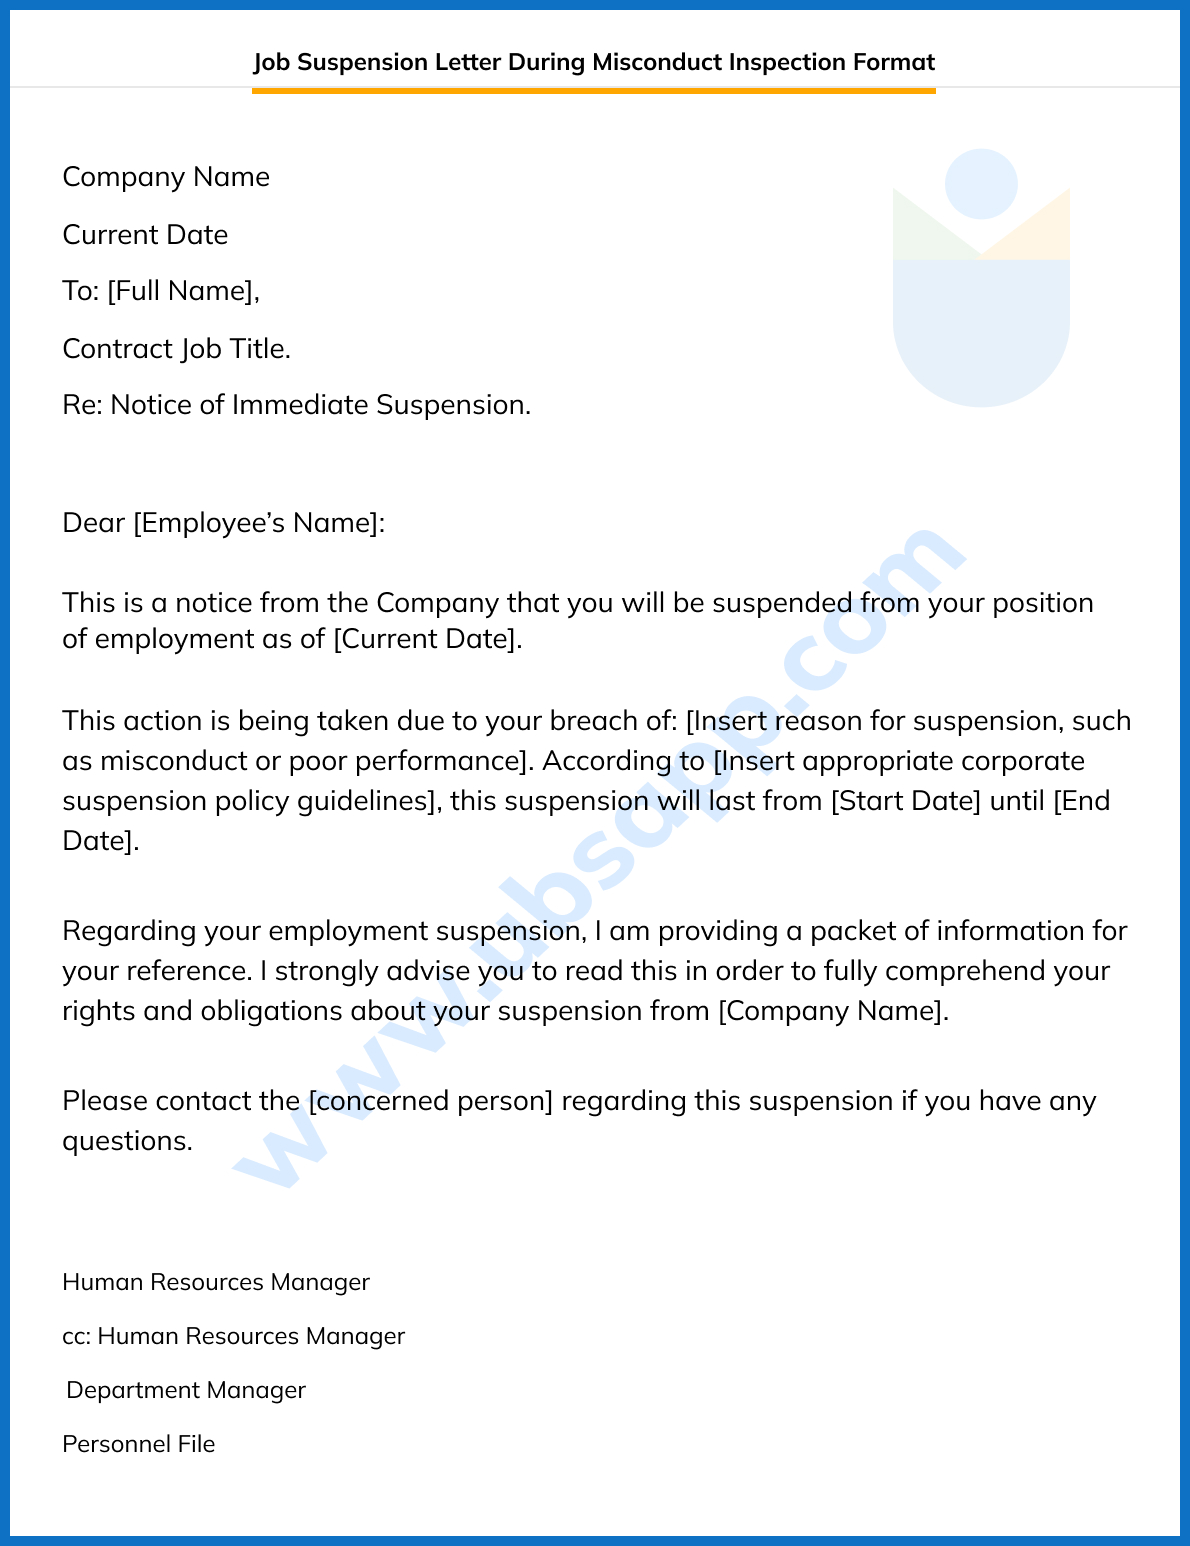 Job Suspension Letter